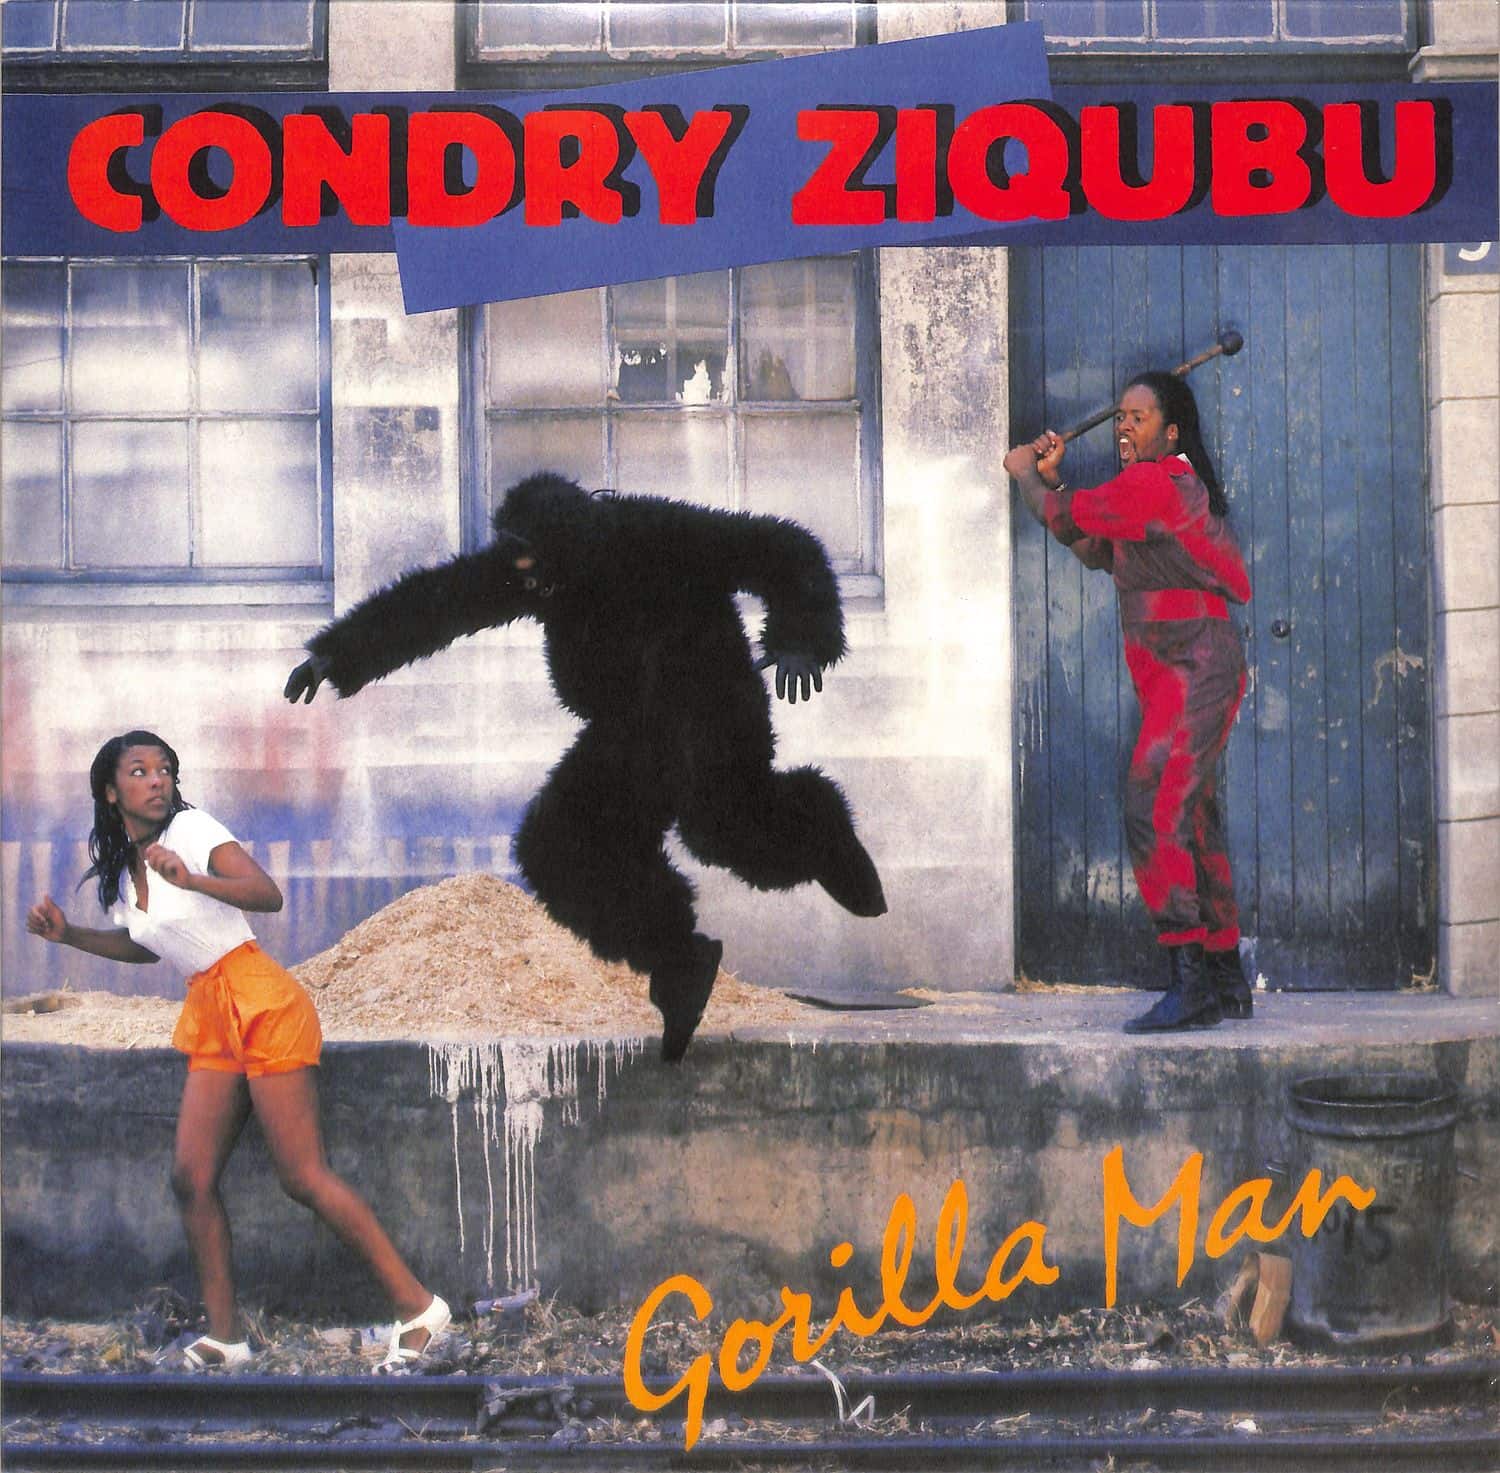 Condry Ziqubu - GORILLA MAN